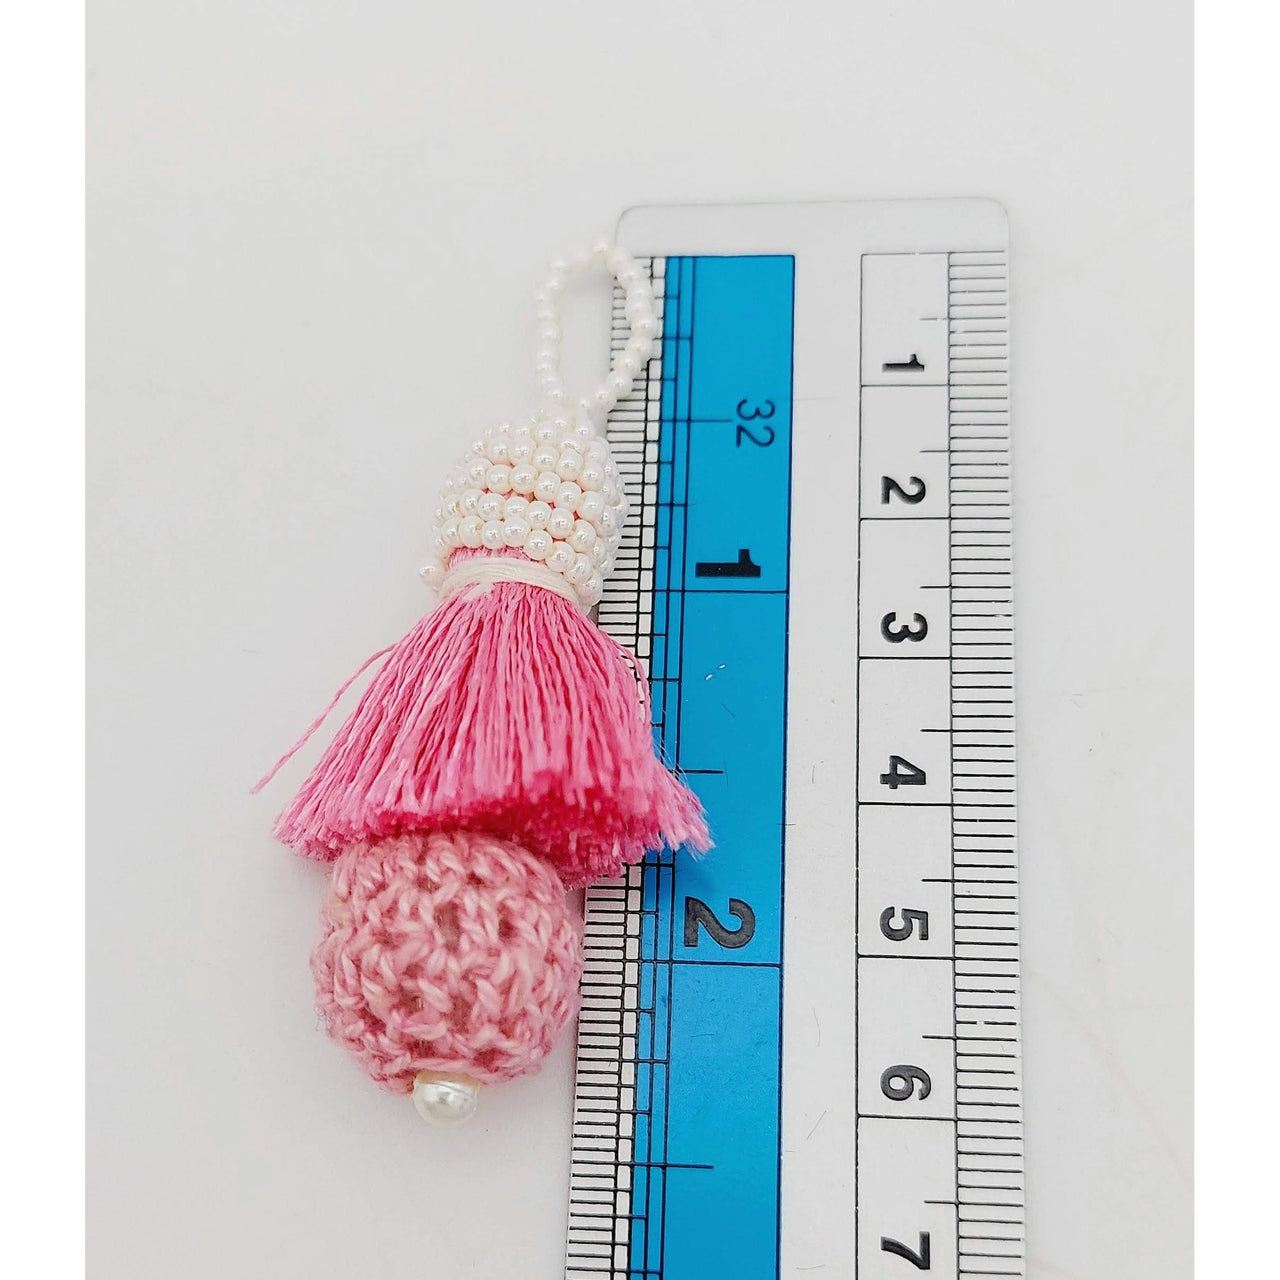 Pink Crochet Ball Tassels With White Pearls Beads, Tassel Charms, Nylon Tassels x 2